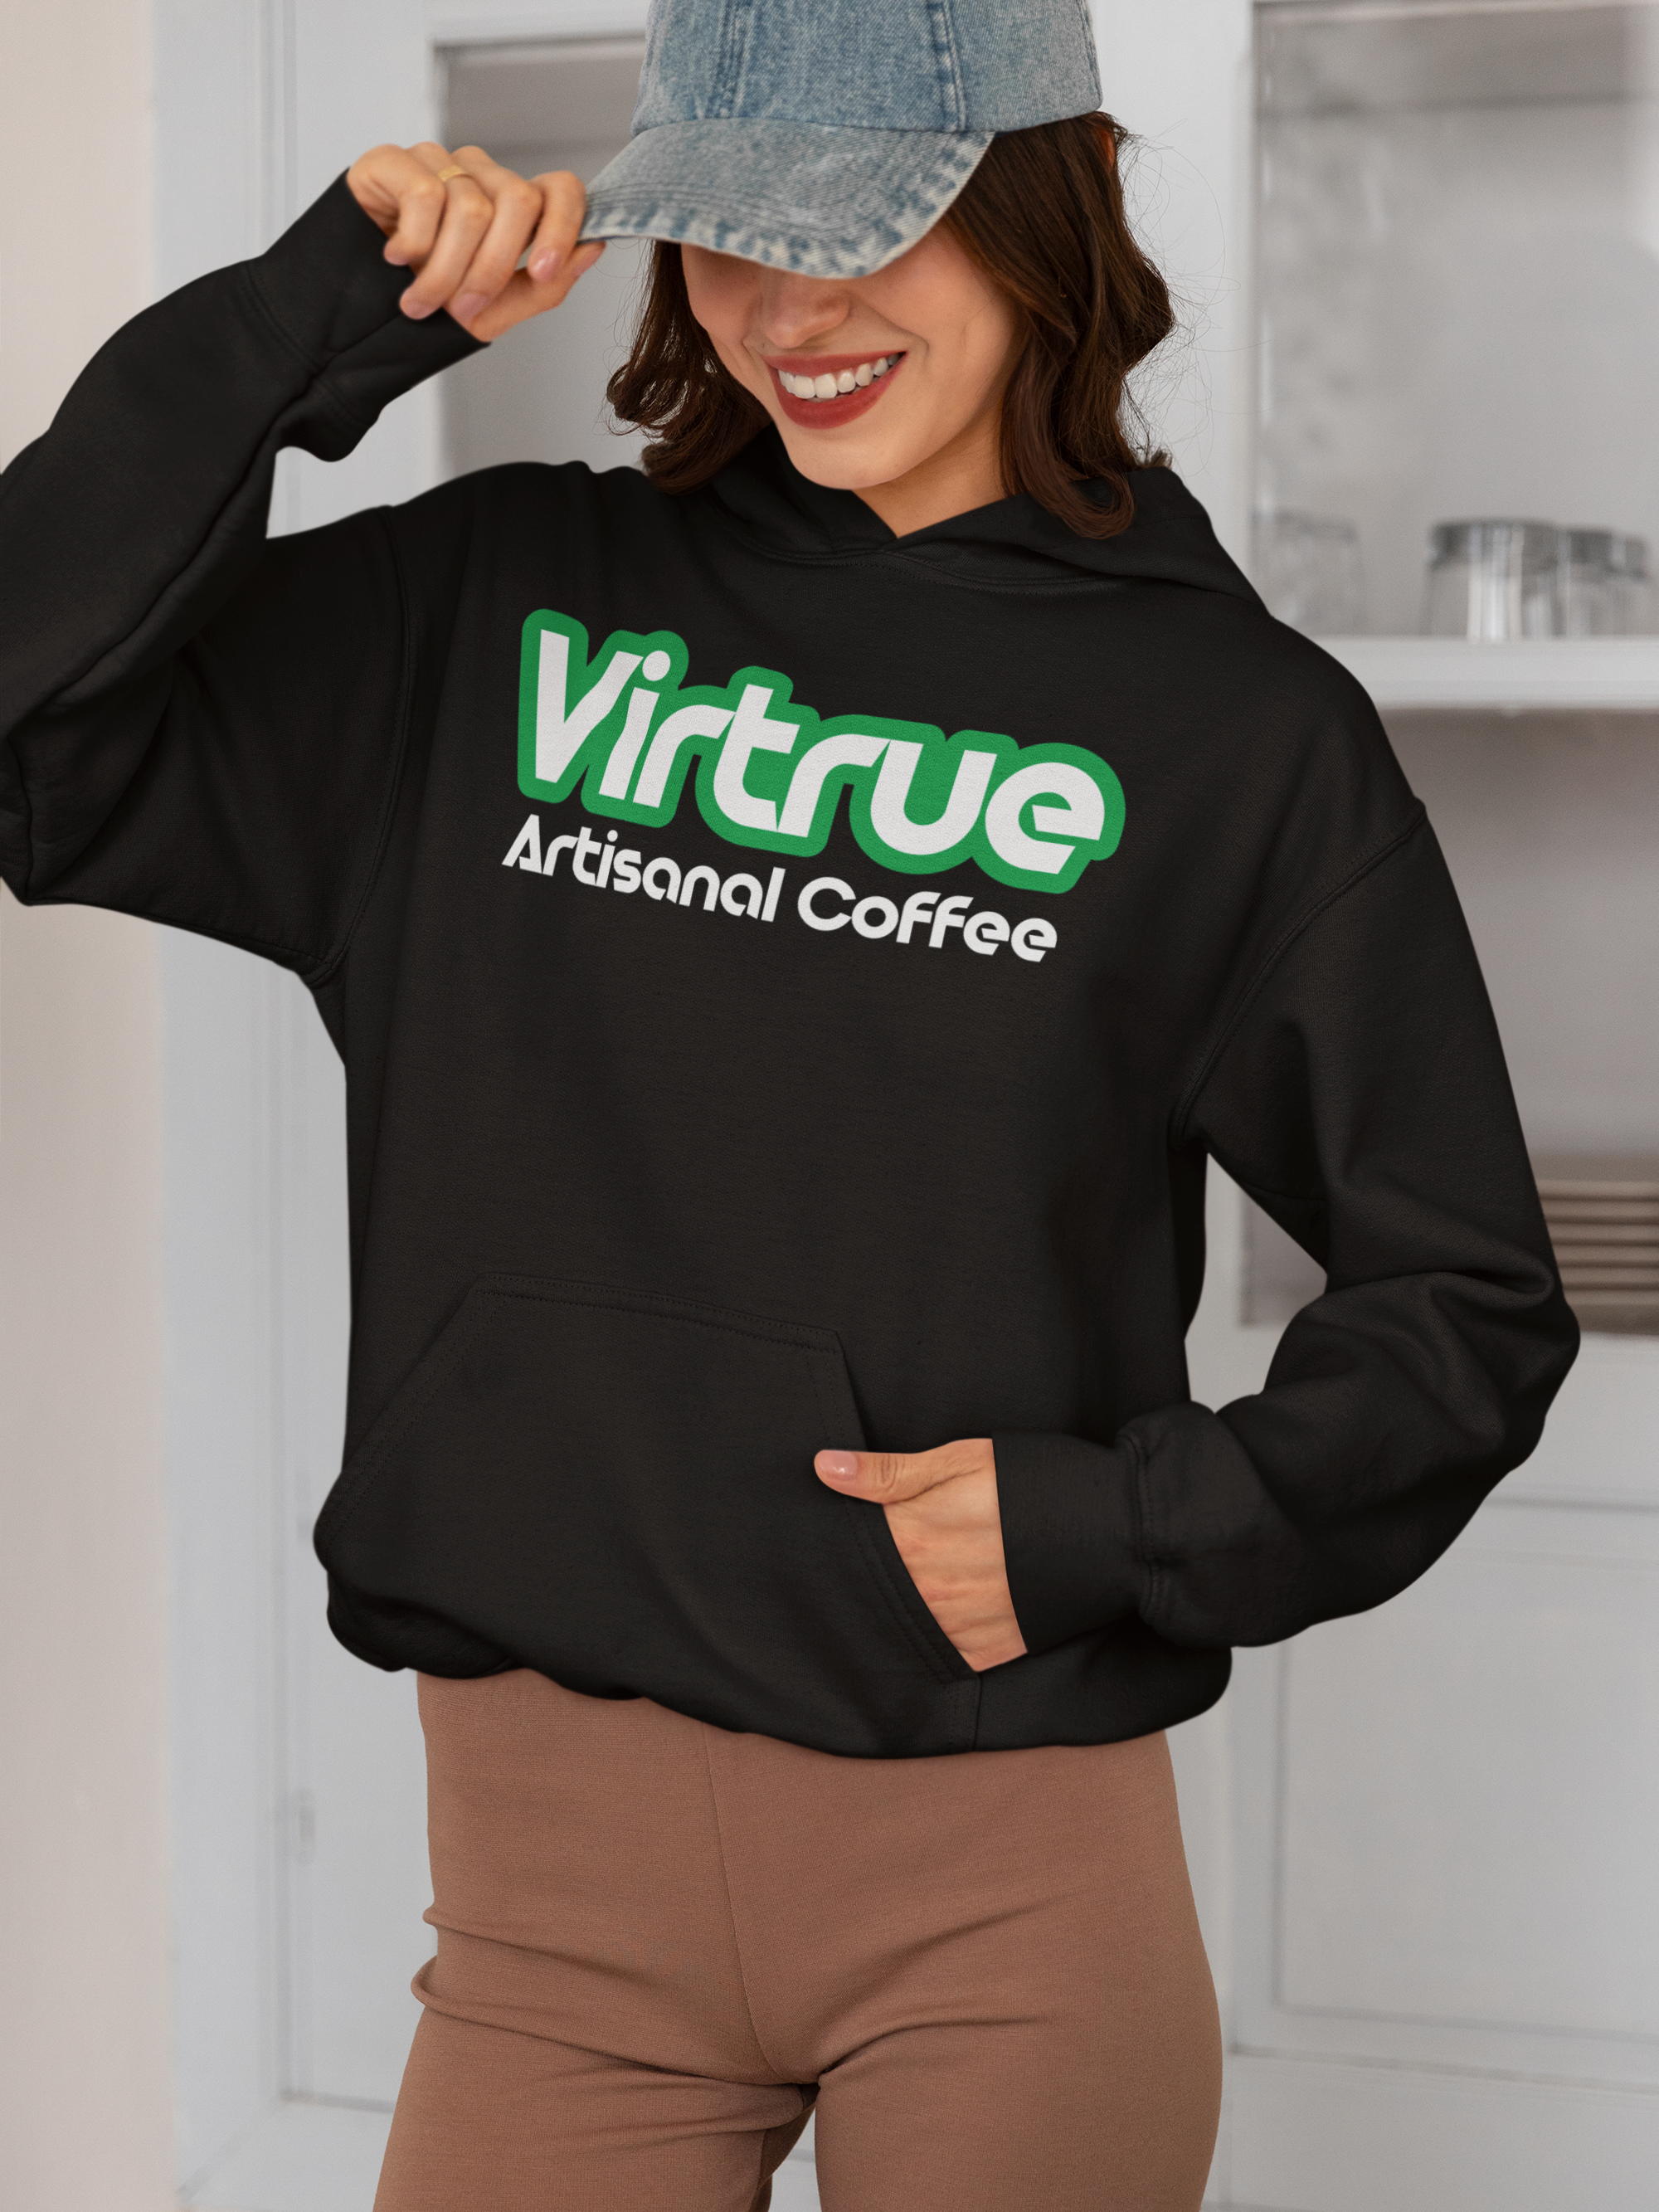 Virtrue Artisinal Coffee Unisex Hooded Sweatshirt